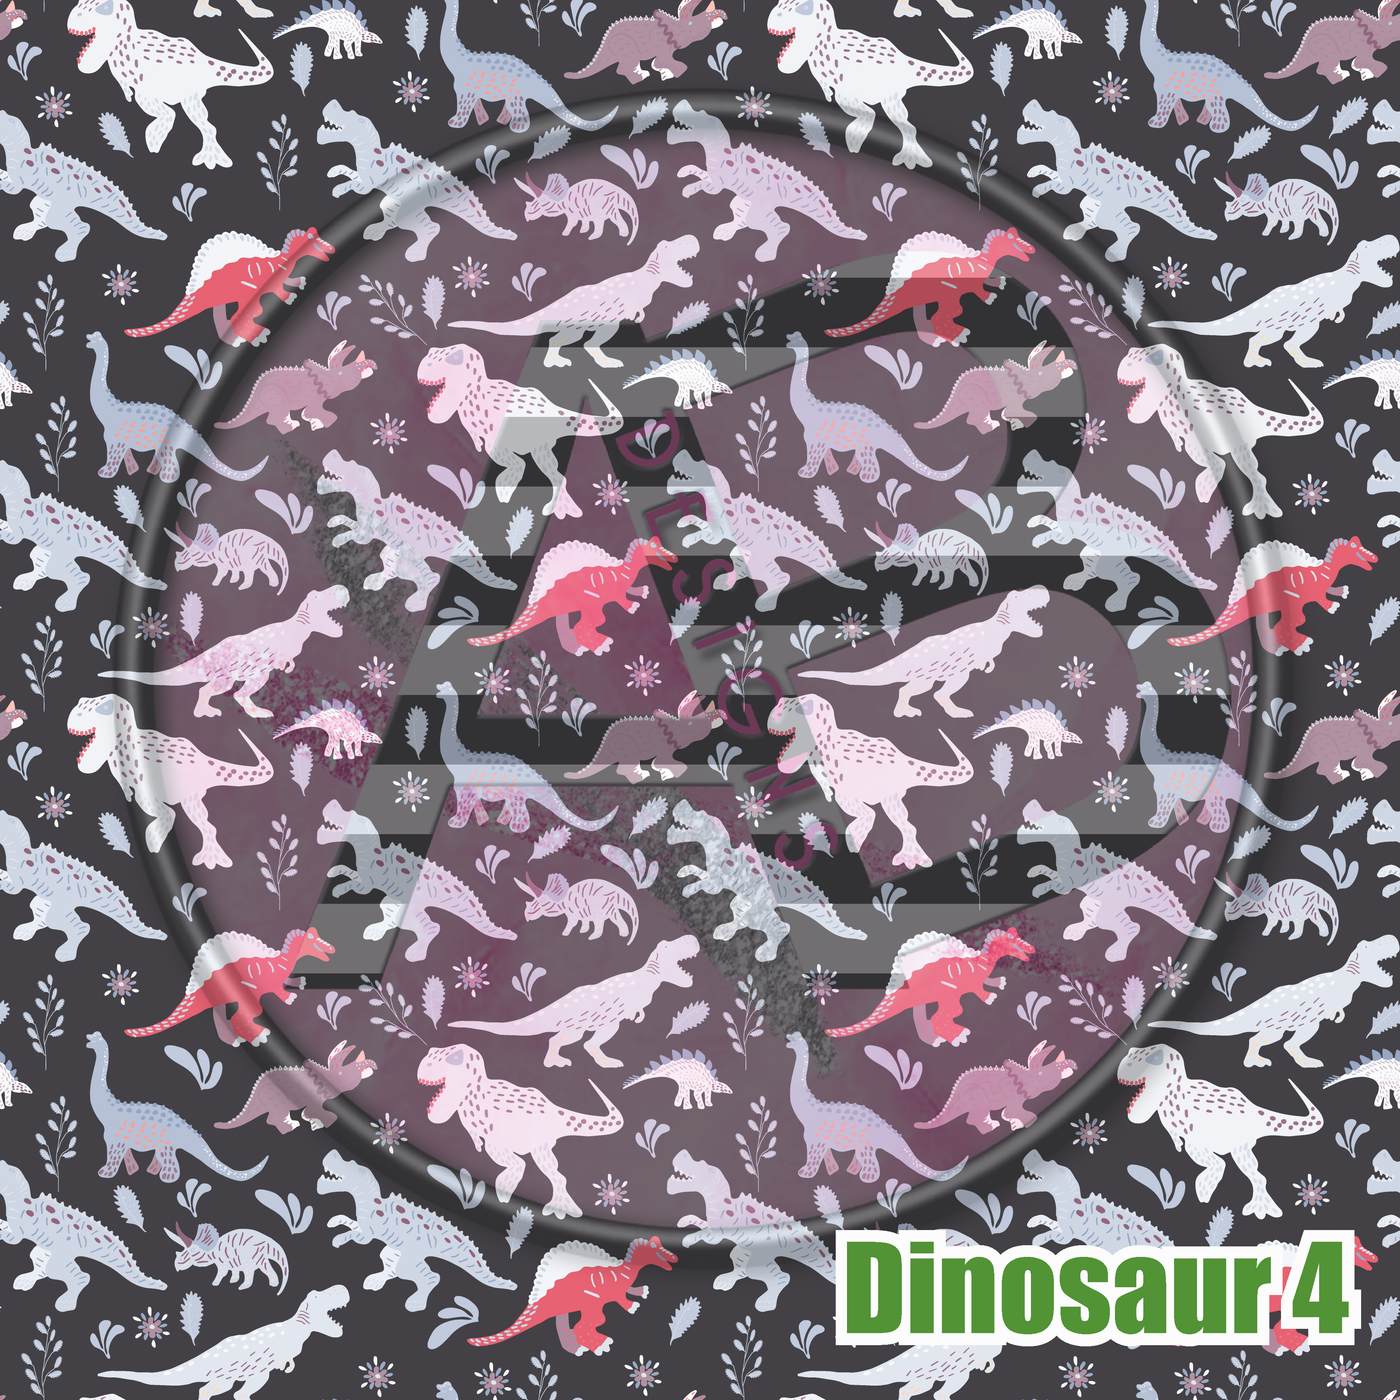 Adhesive Patterned Vinyl - Dinosaur 4